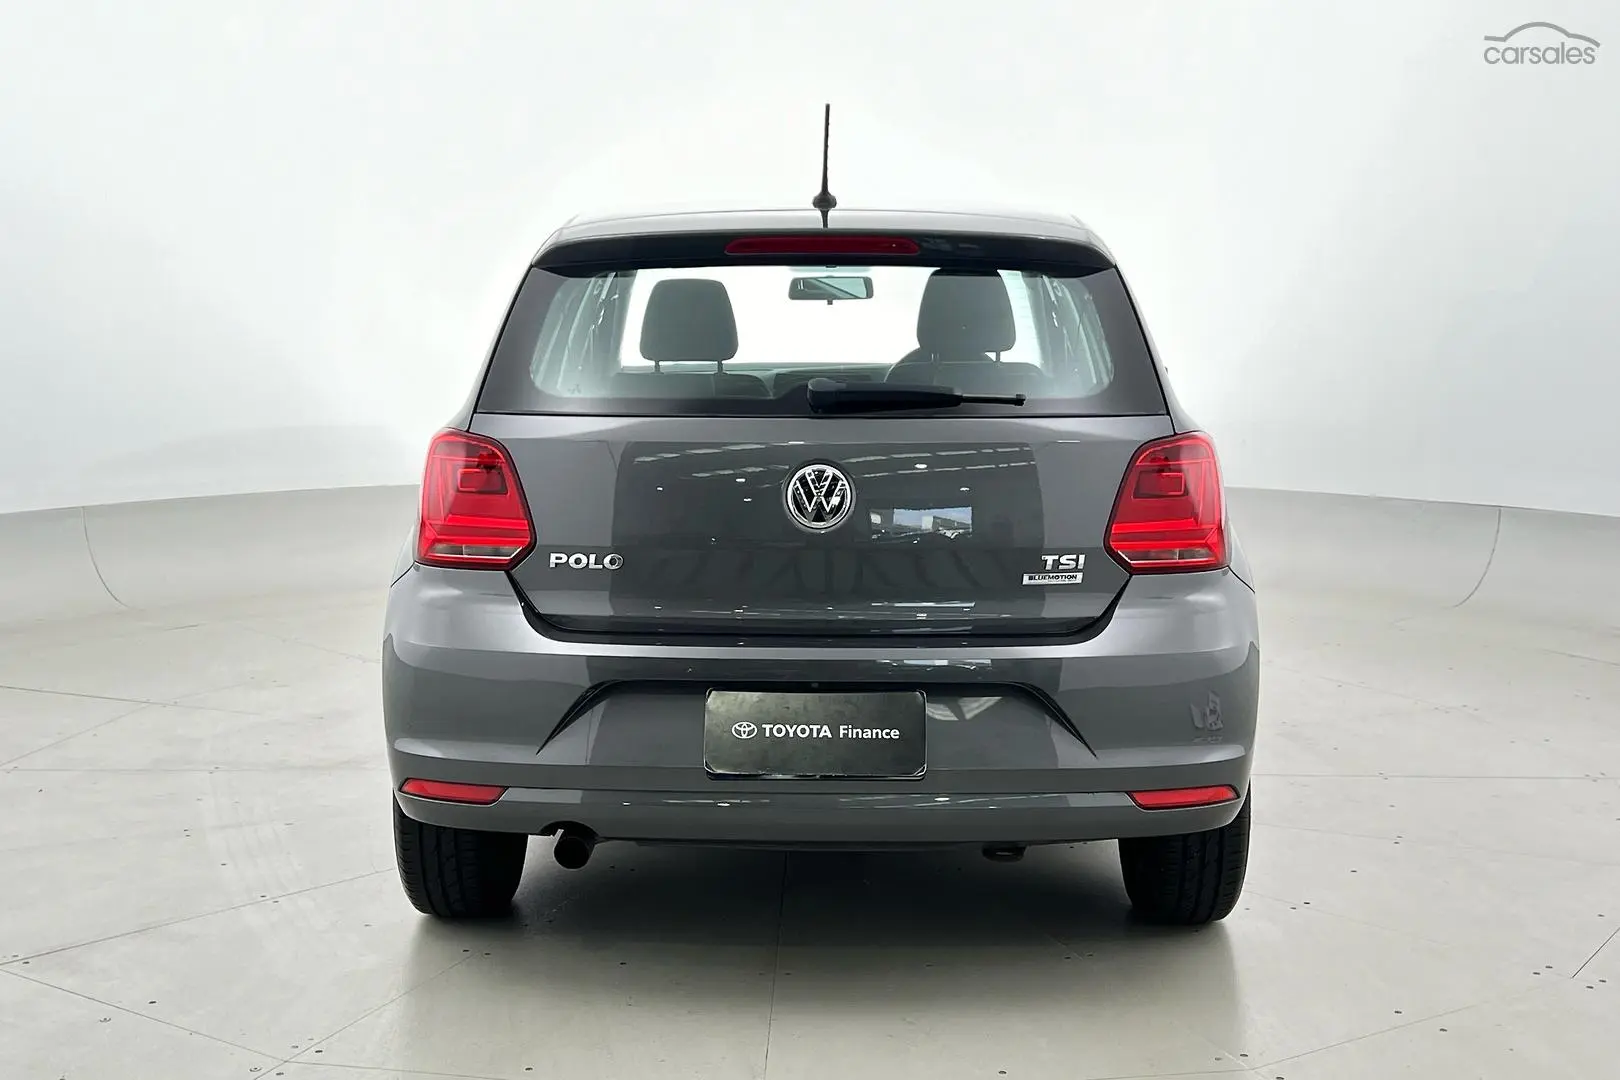 2016 Volkswagen Polo Image 7